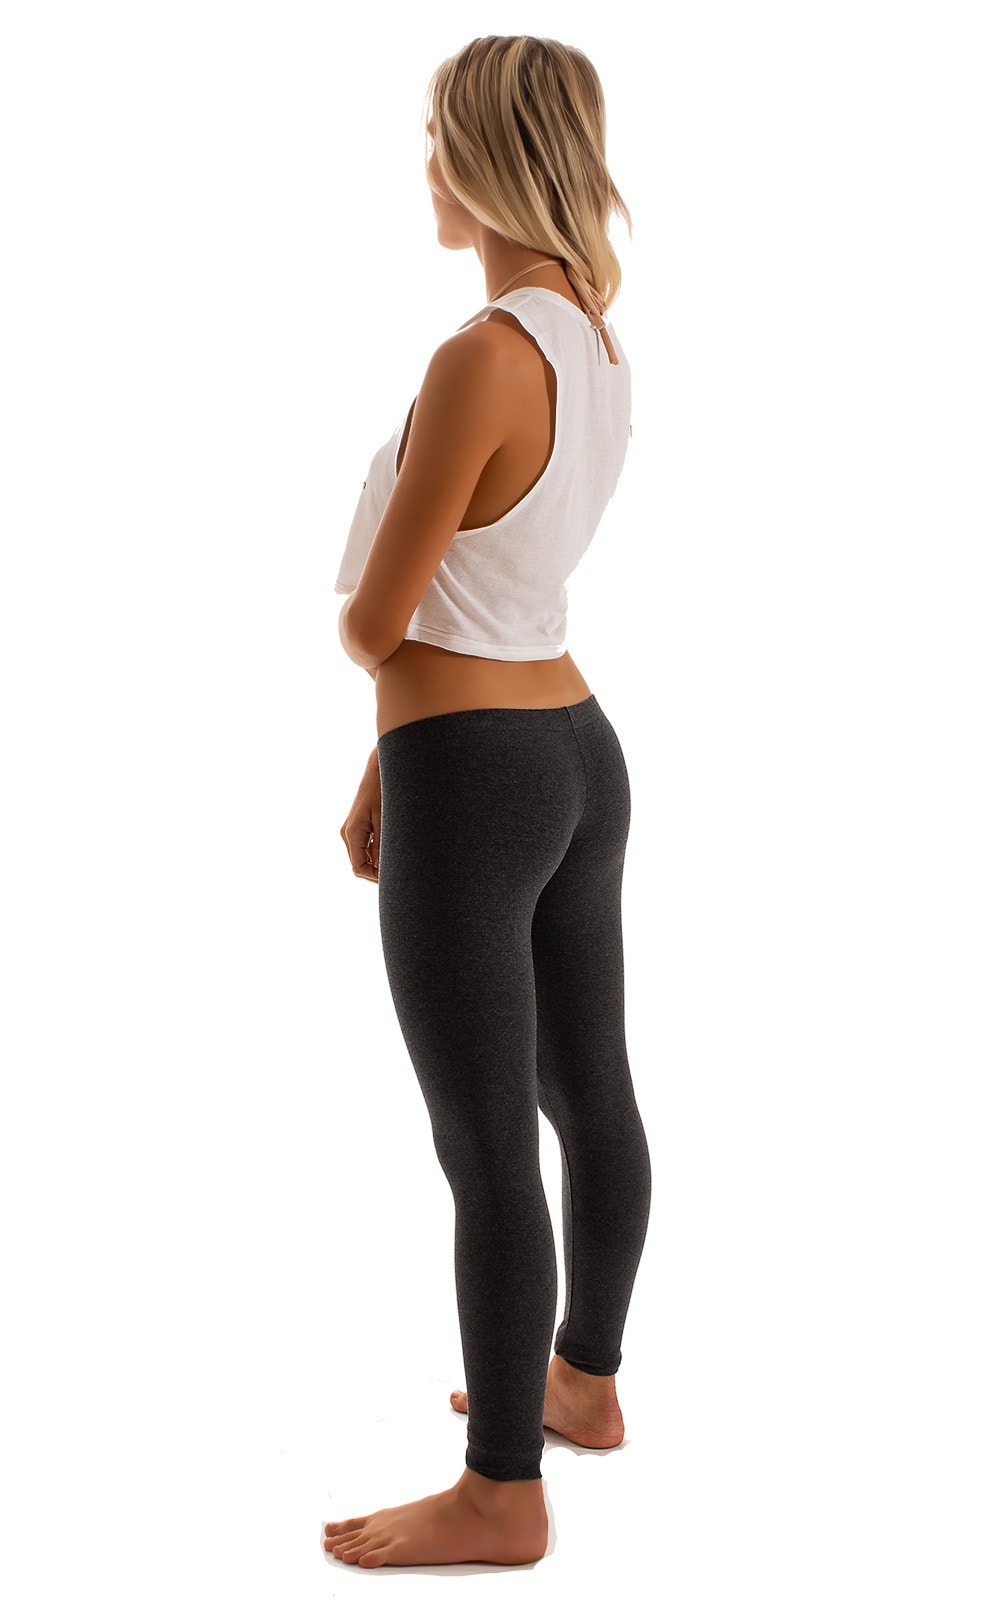 Womens Super Low Rise Fitness Leggings in Black Cotton Lycra, Rear View